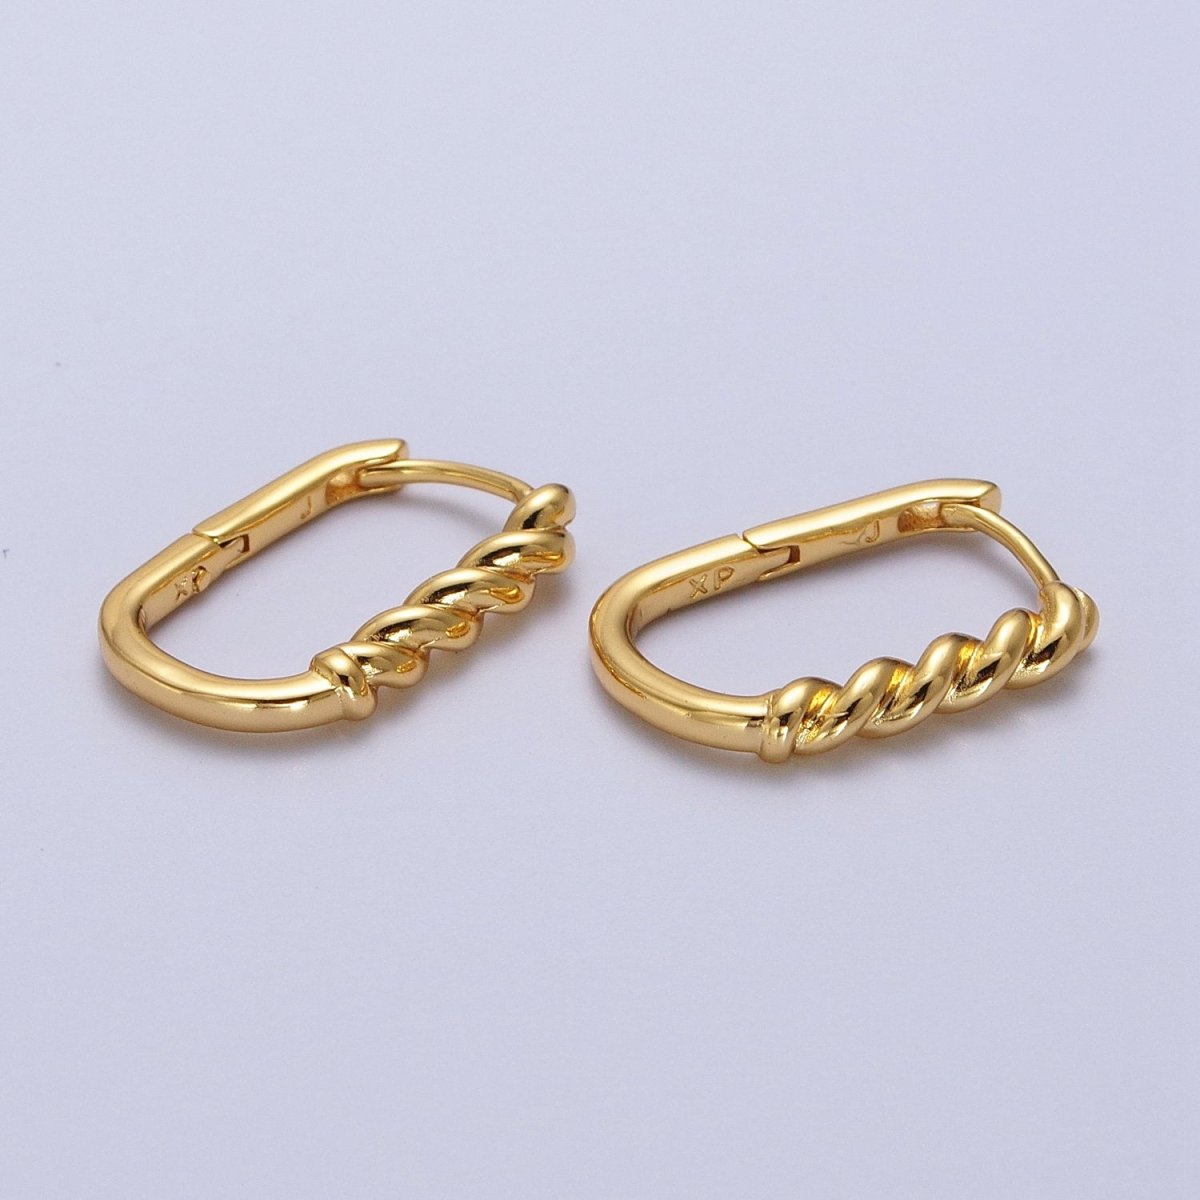 19mm Twisted Rope U-Shaped Oblong Gold Hoop Earrings | AB031 - DLUXCA